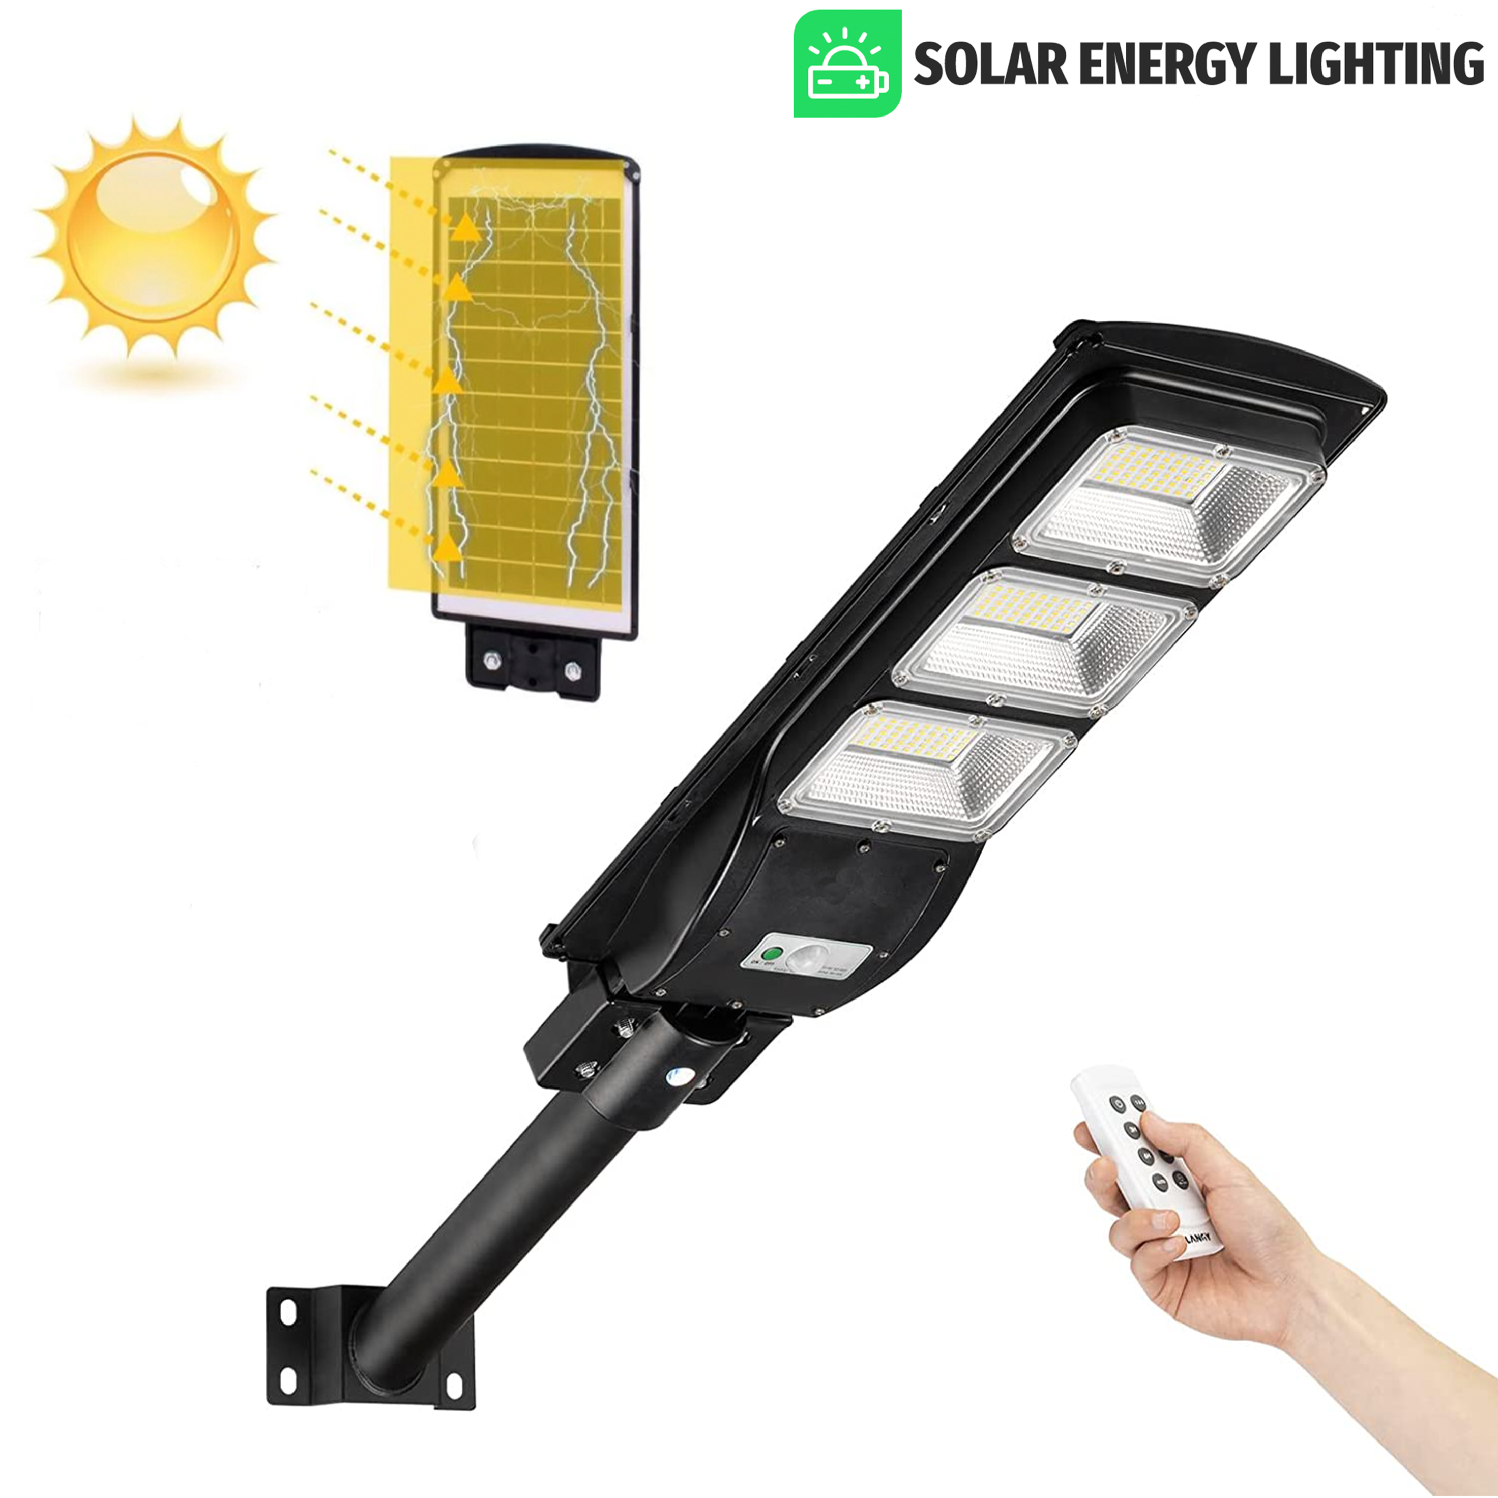 IlluminateSolarMega™- The Ultimate 375W/6500 Lumens Ultra-Bright Solar Street Light